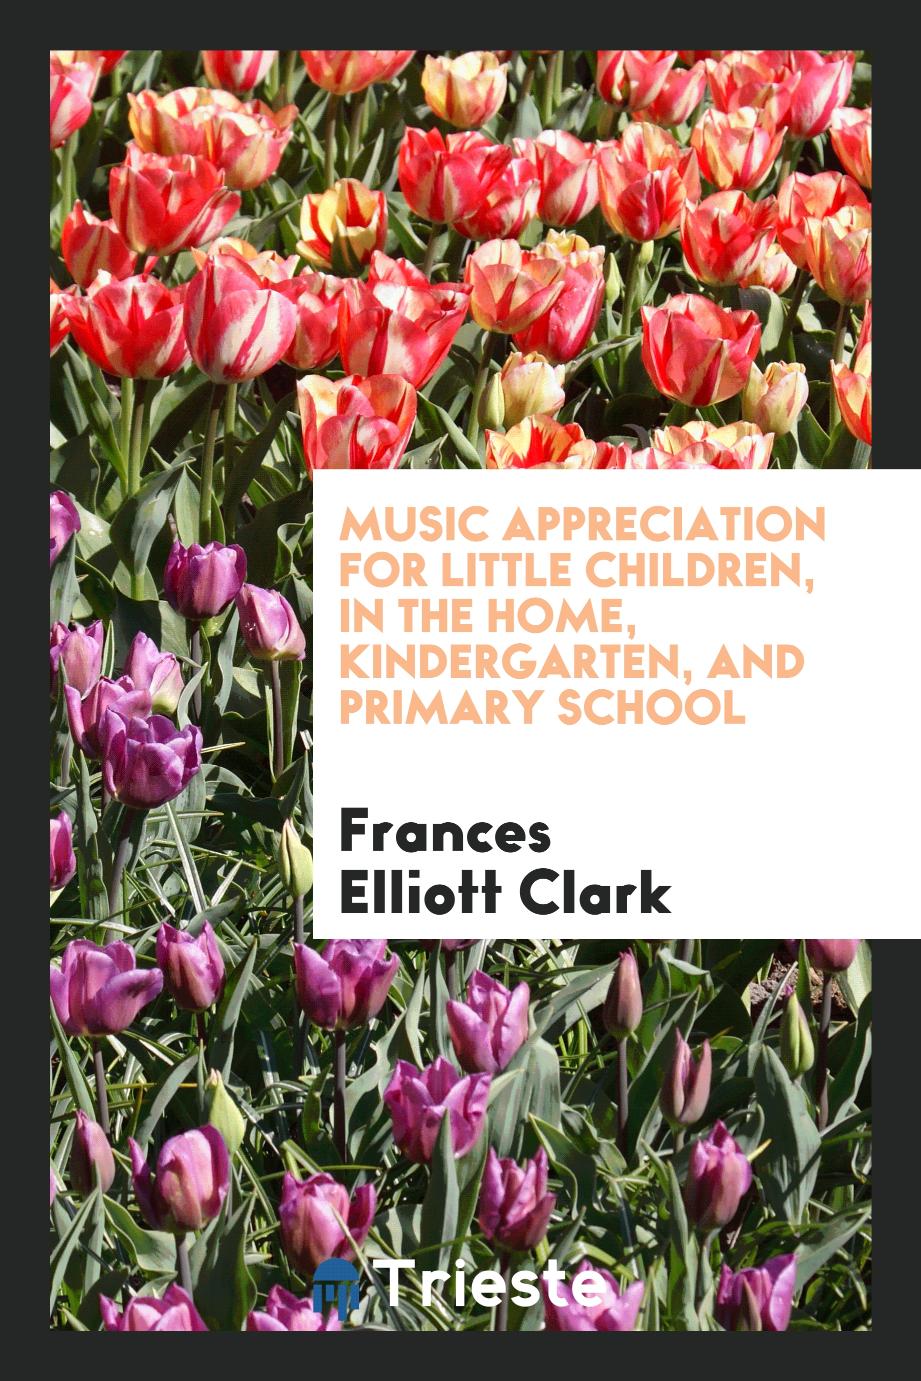 Music Appreciation for Little Children, in the Home, Kindergarten, and Primary School